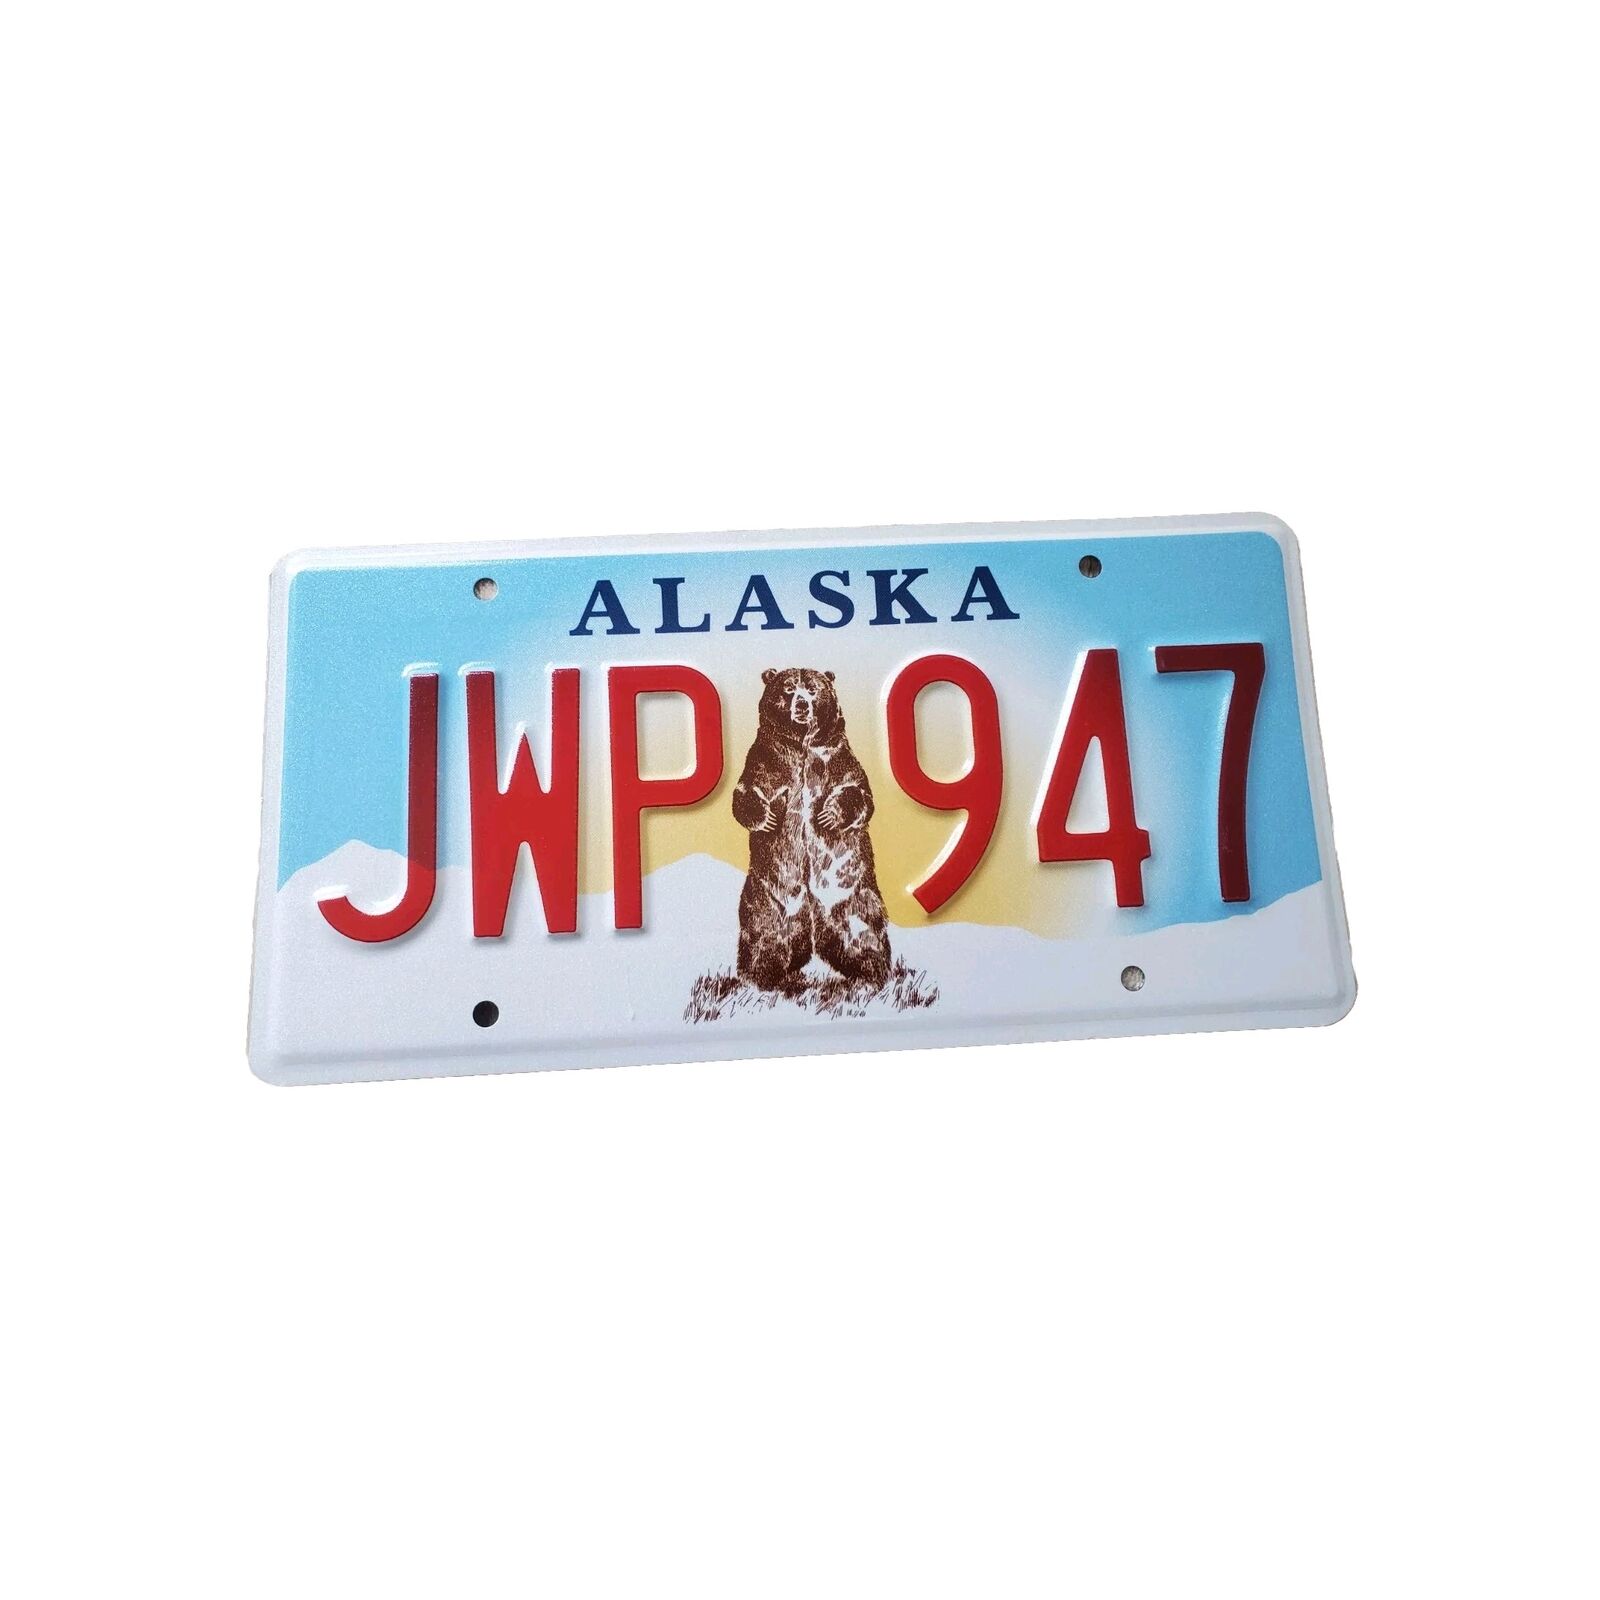 Alaska Standing Bear License Plate #JWP947  Expired 3 Years    BUY NOW $9.99